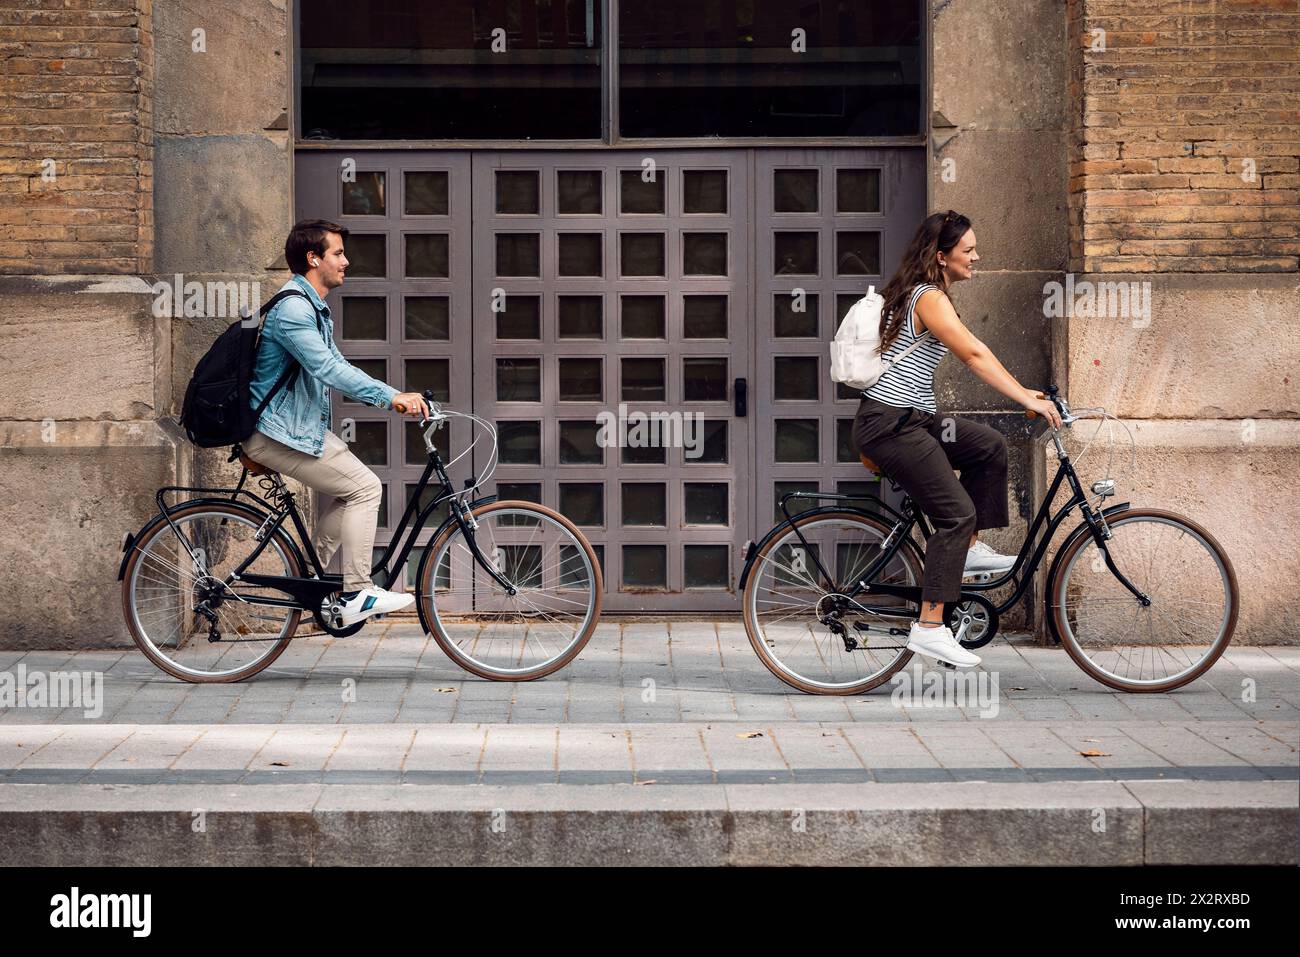 Couple cycling near building on sidewalk Stock Photo